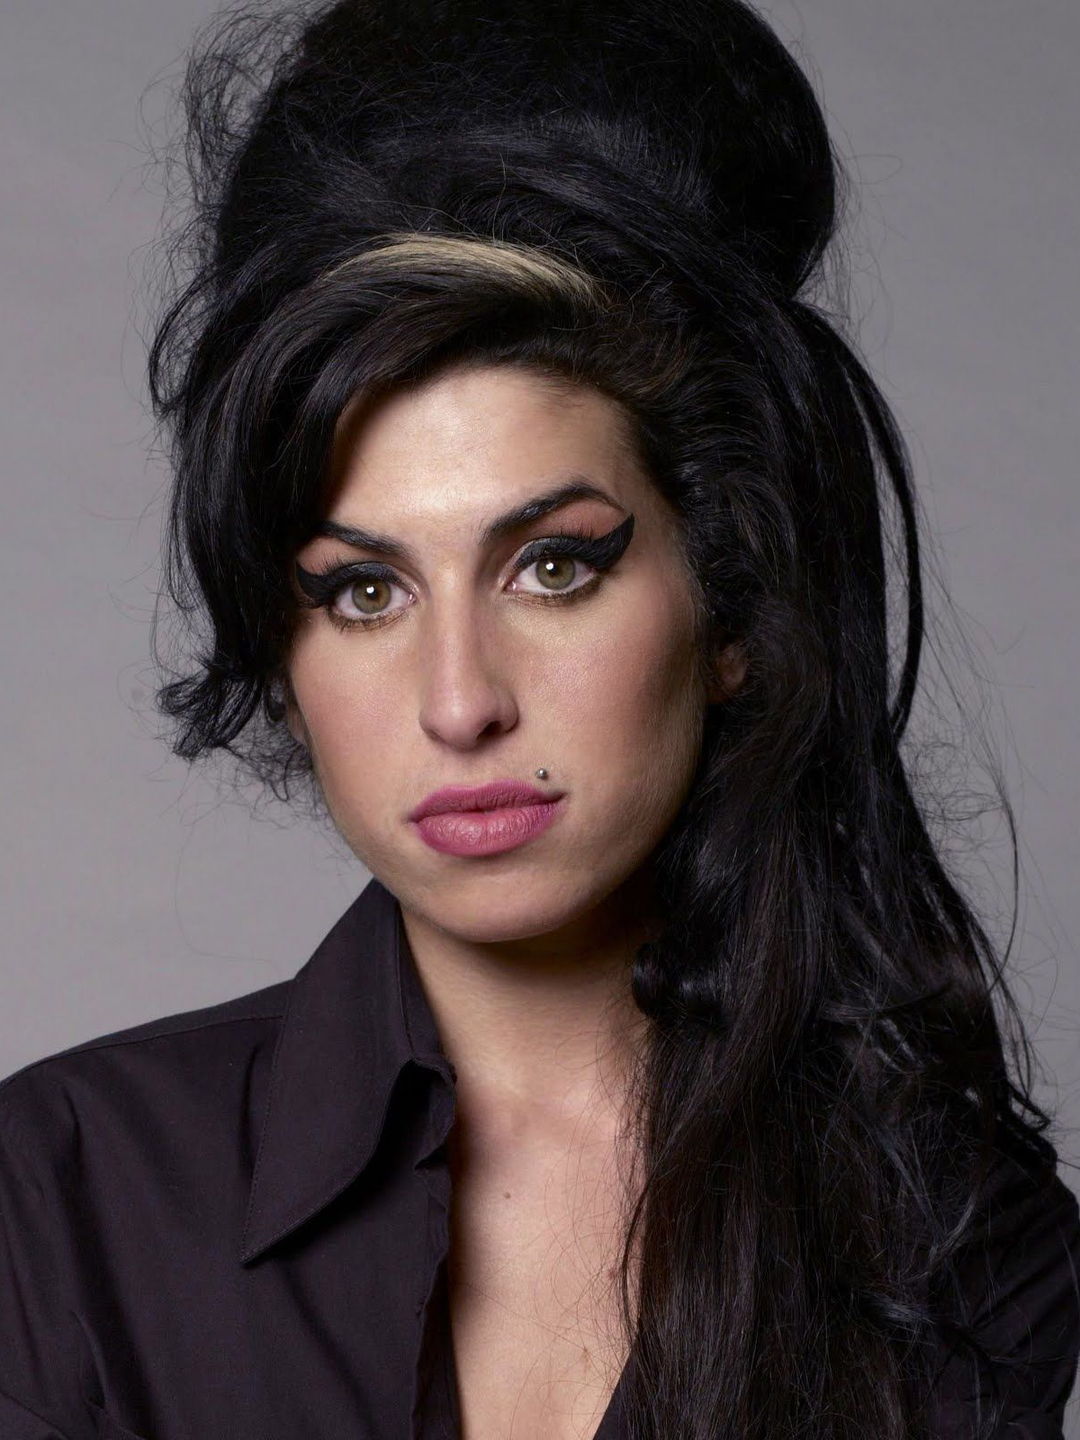 Amy Winehouse story of success